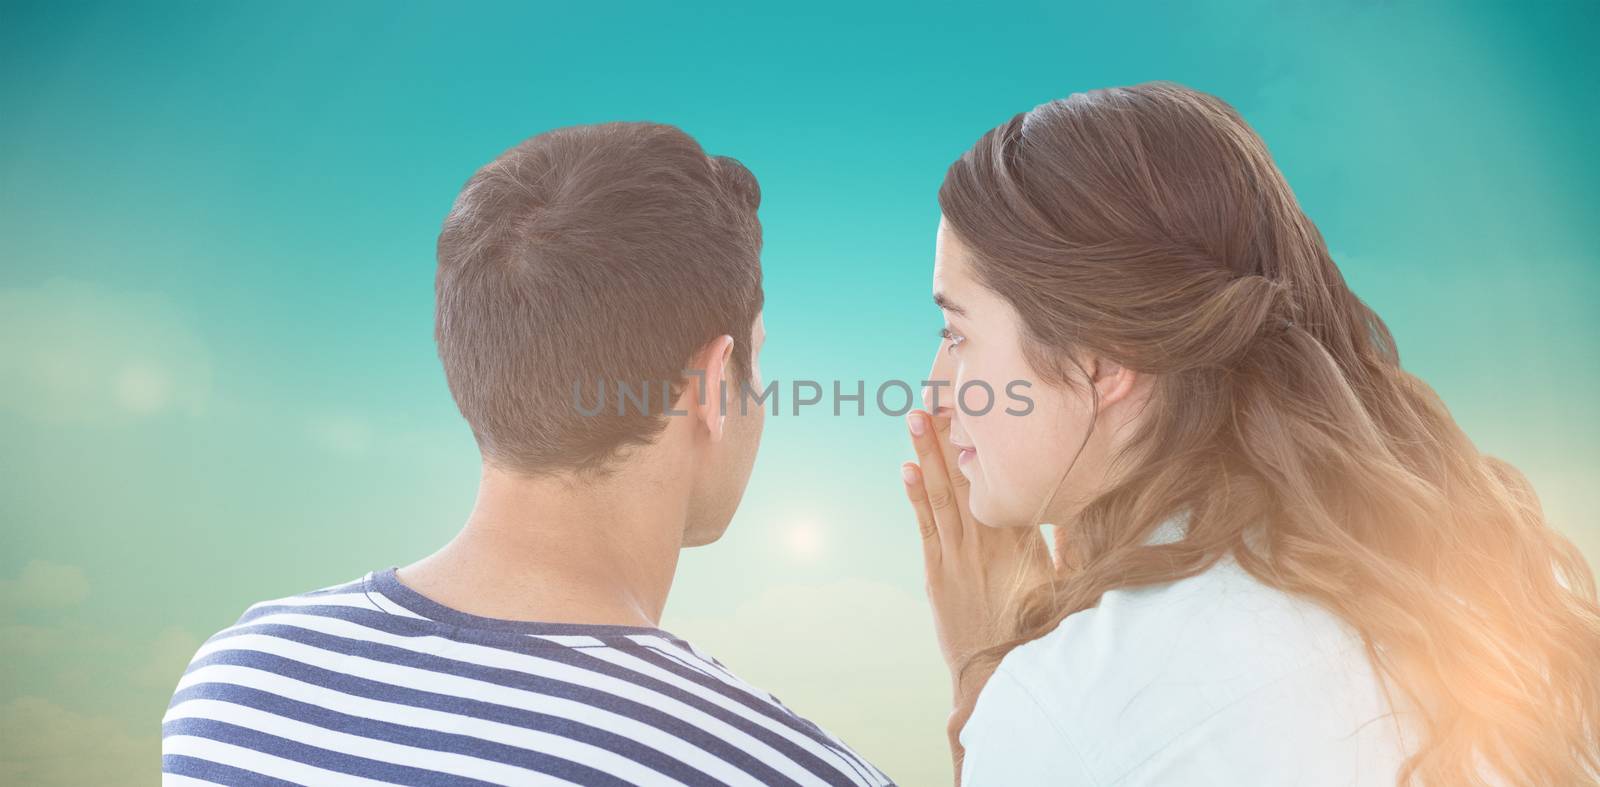 Composite image of woman whispering secret to boyfriend by Wavebreakmedia